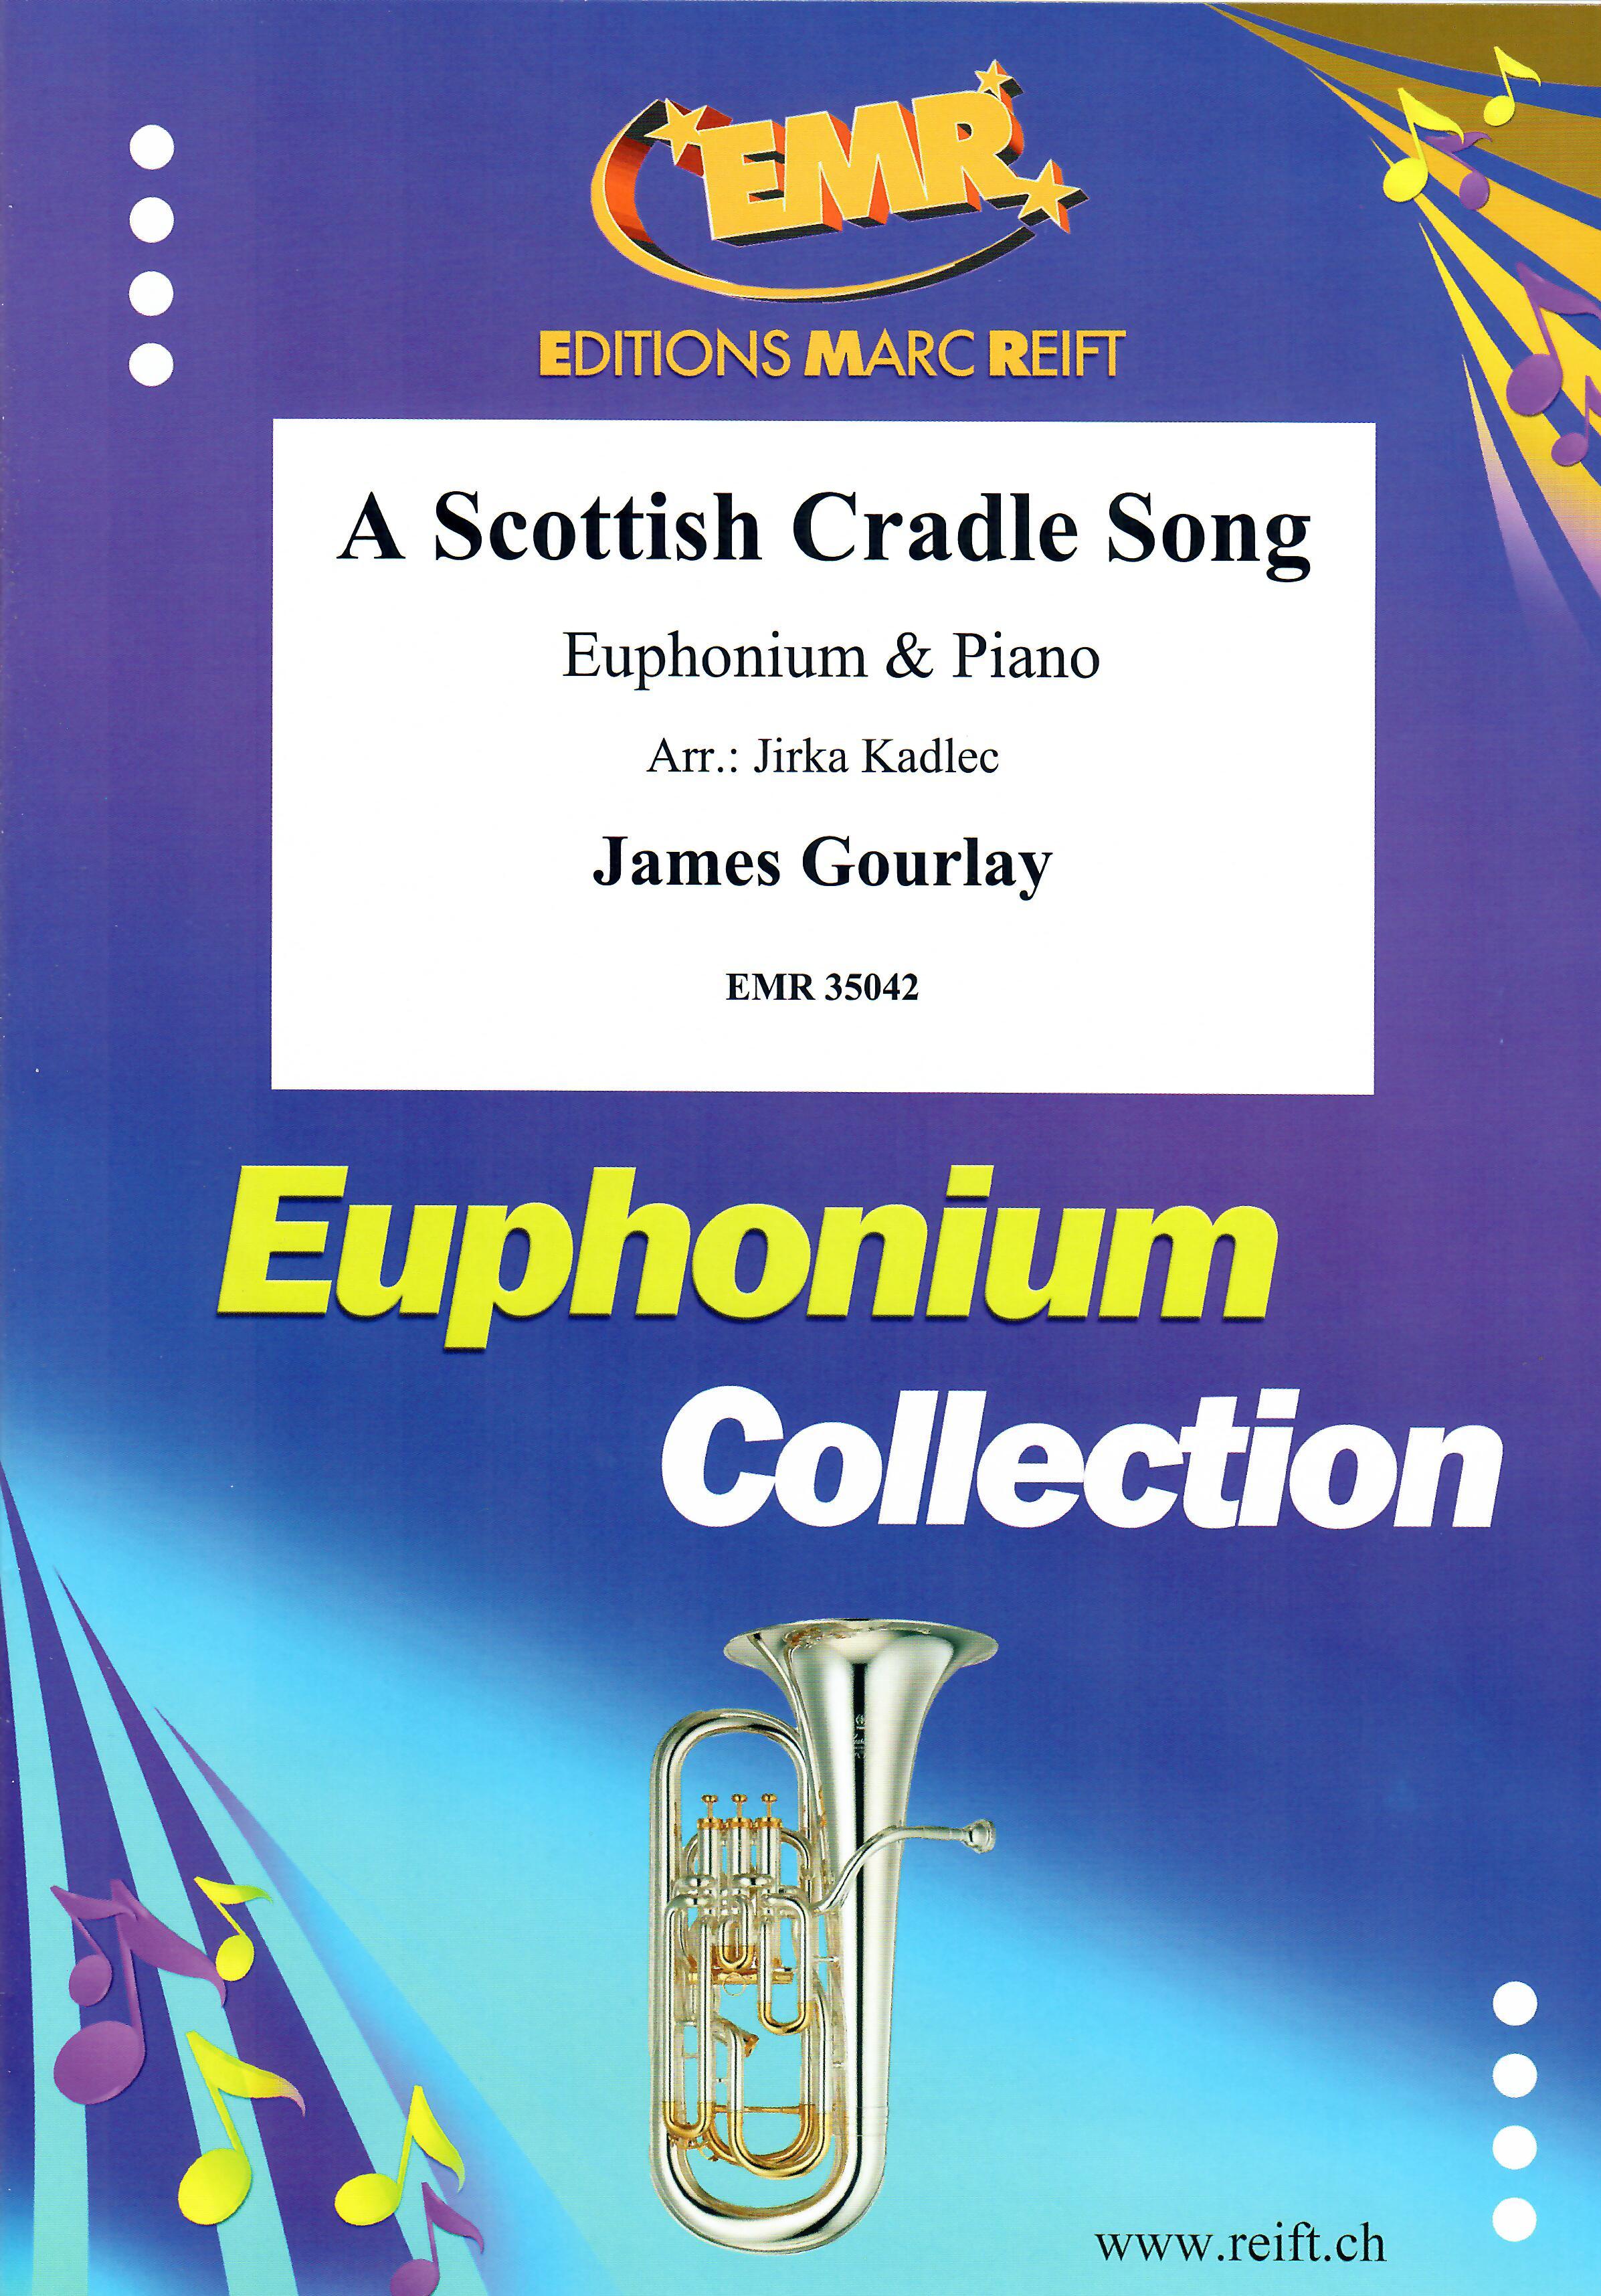 A SCOTTISH CRADLE SONG, SOLOS - Euphonium